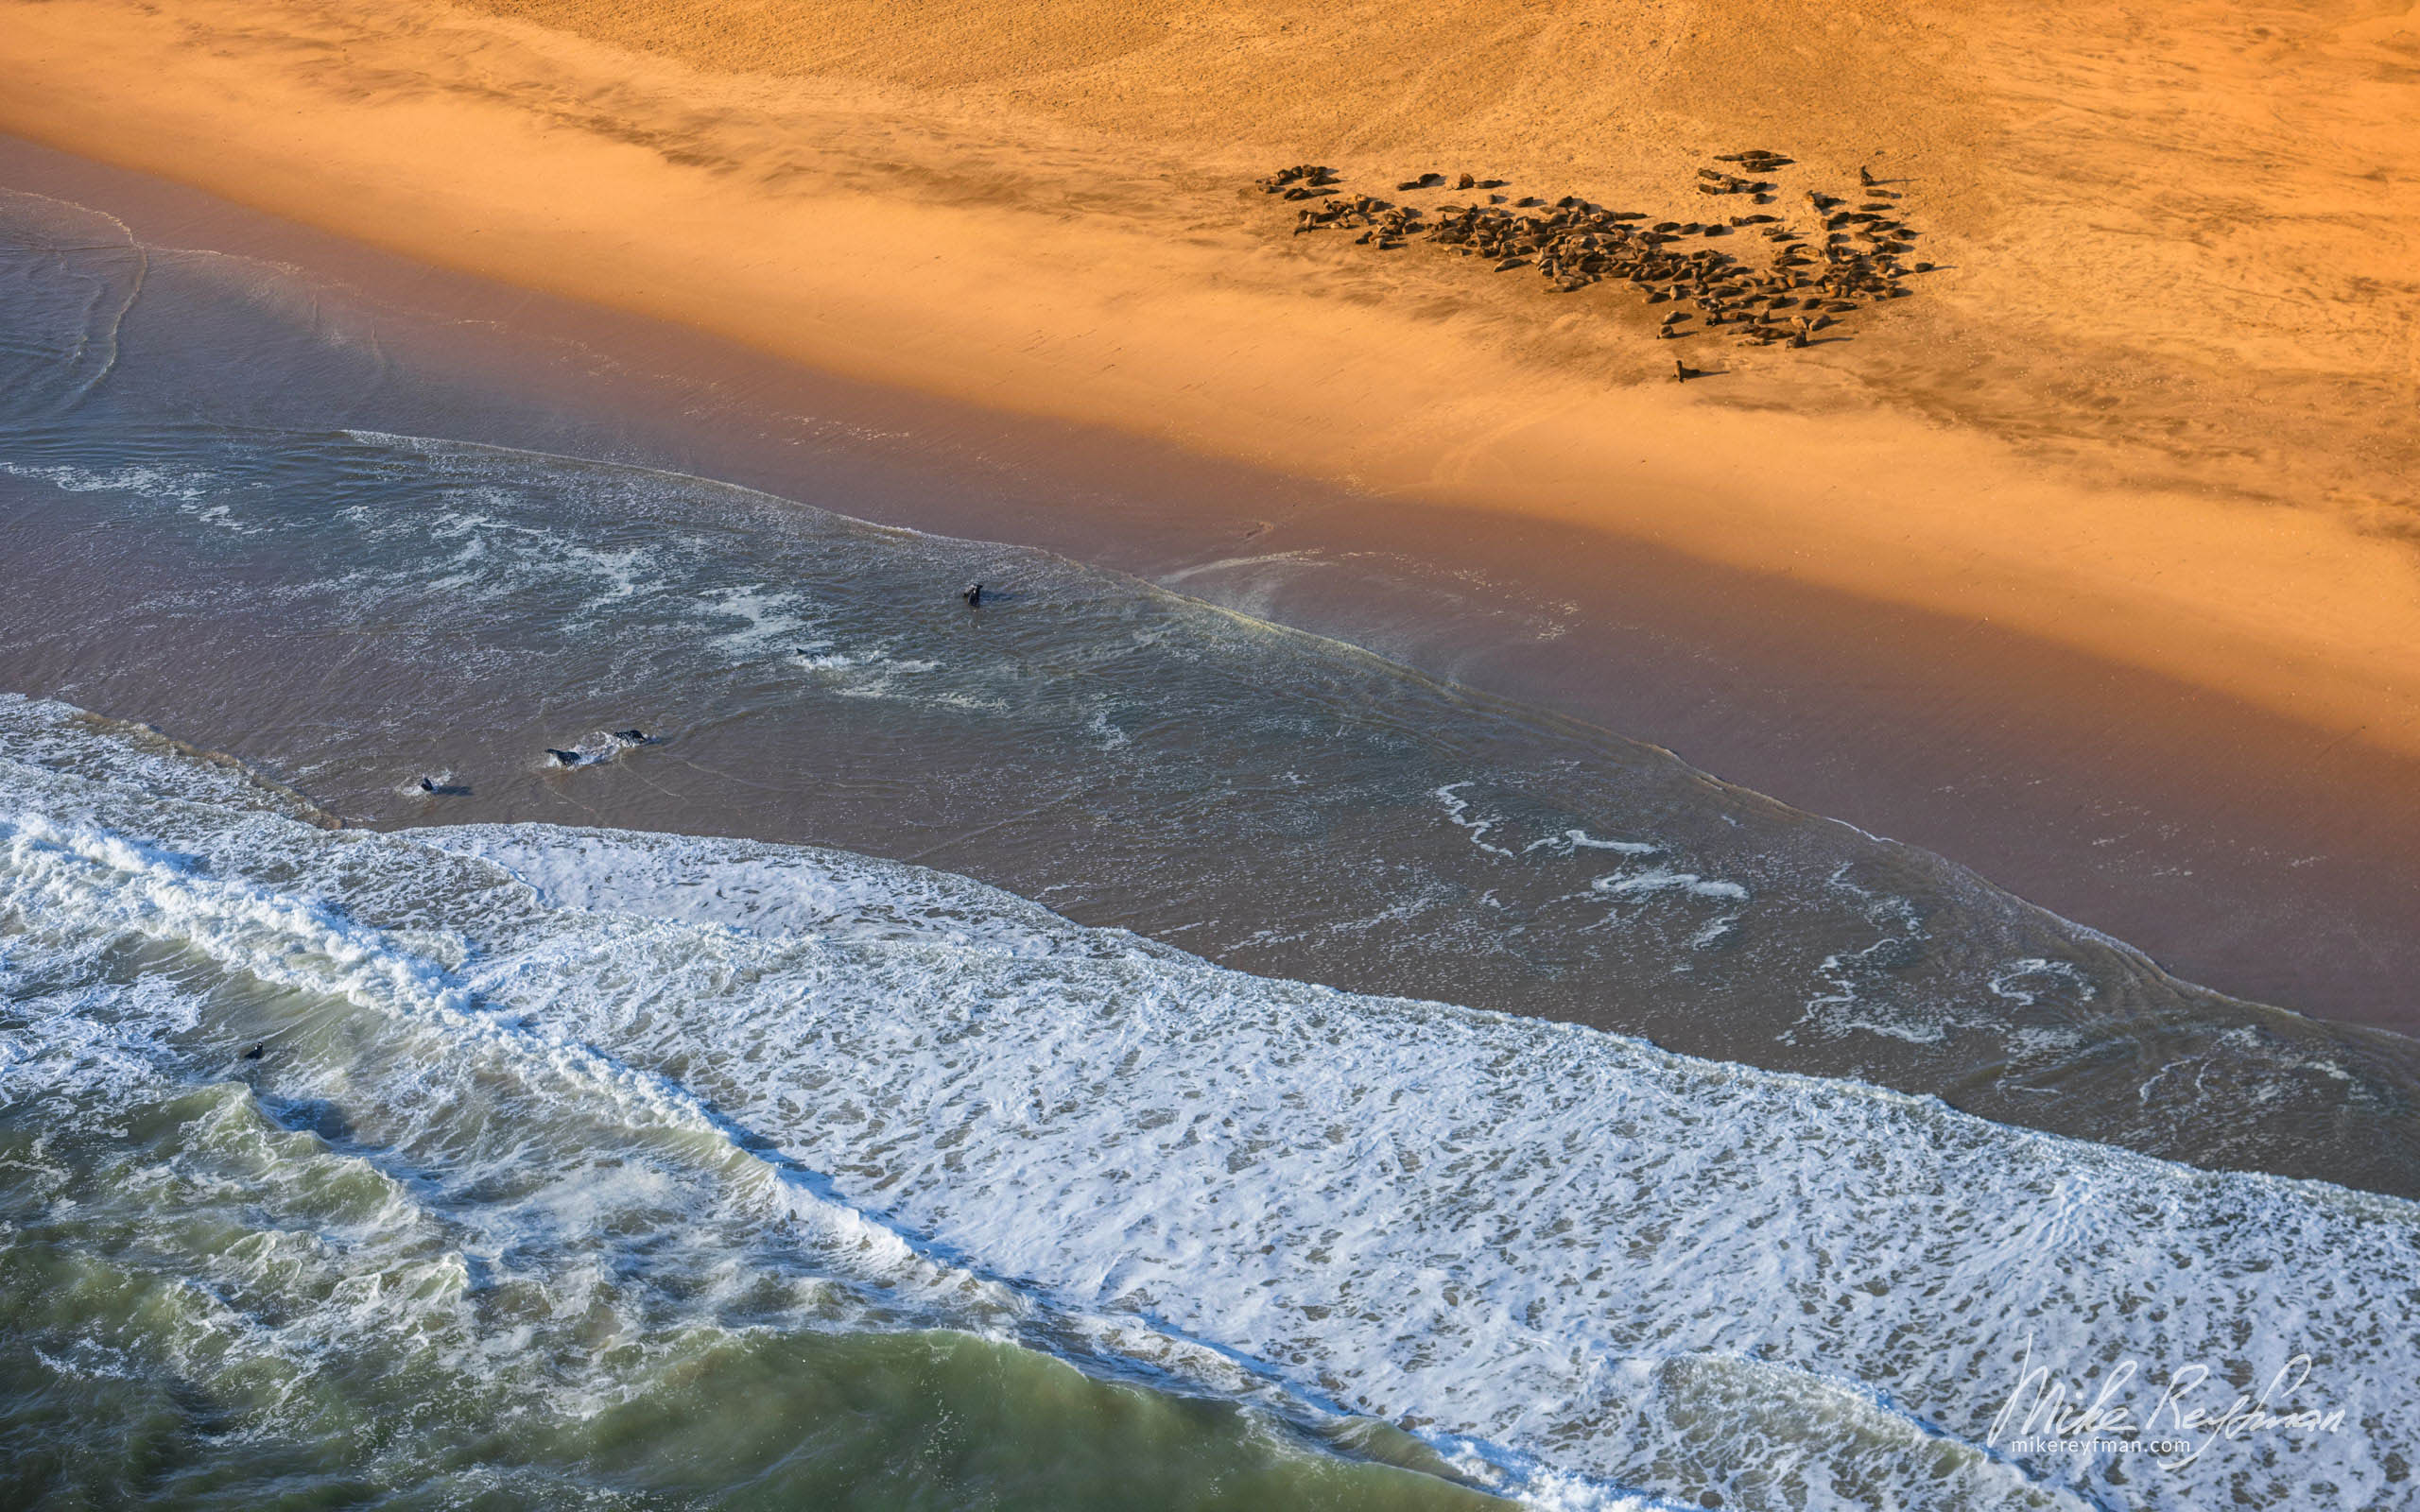 Cape Fur Seals. Namib Skeleton Coast National Park, Namibia SCW_033_10N4571 - Shipwrecks and Endless Dunes of Namib Skeleton Coast NP, Dense ocean fogs of the Benguela Current, Cape Fur seals, and Walvis Bay Salt Works. Namibia.  - Mike Reyfman Photography